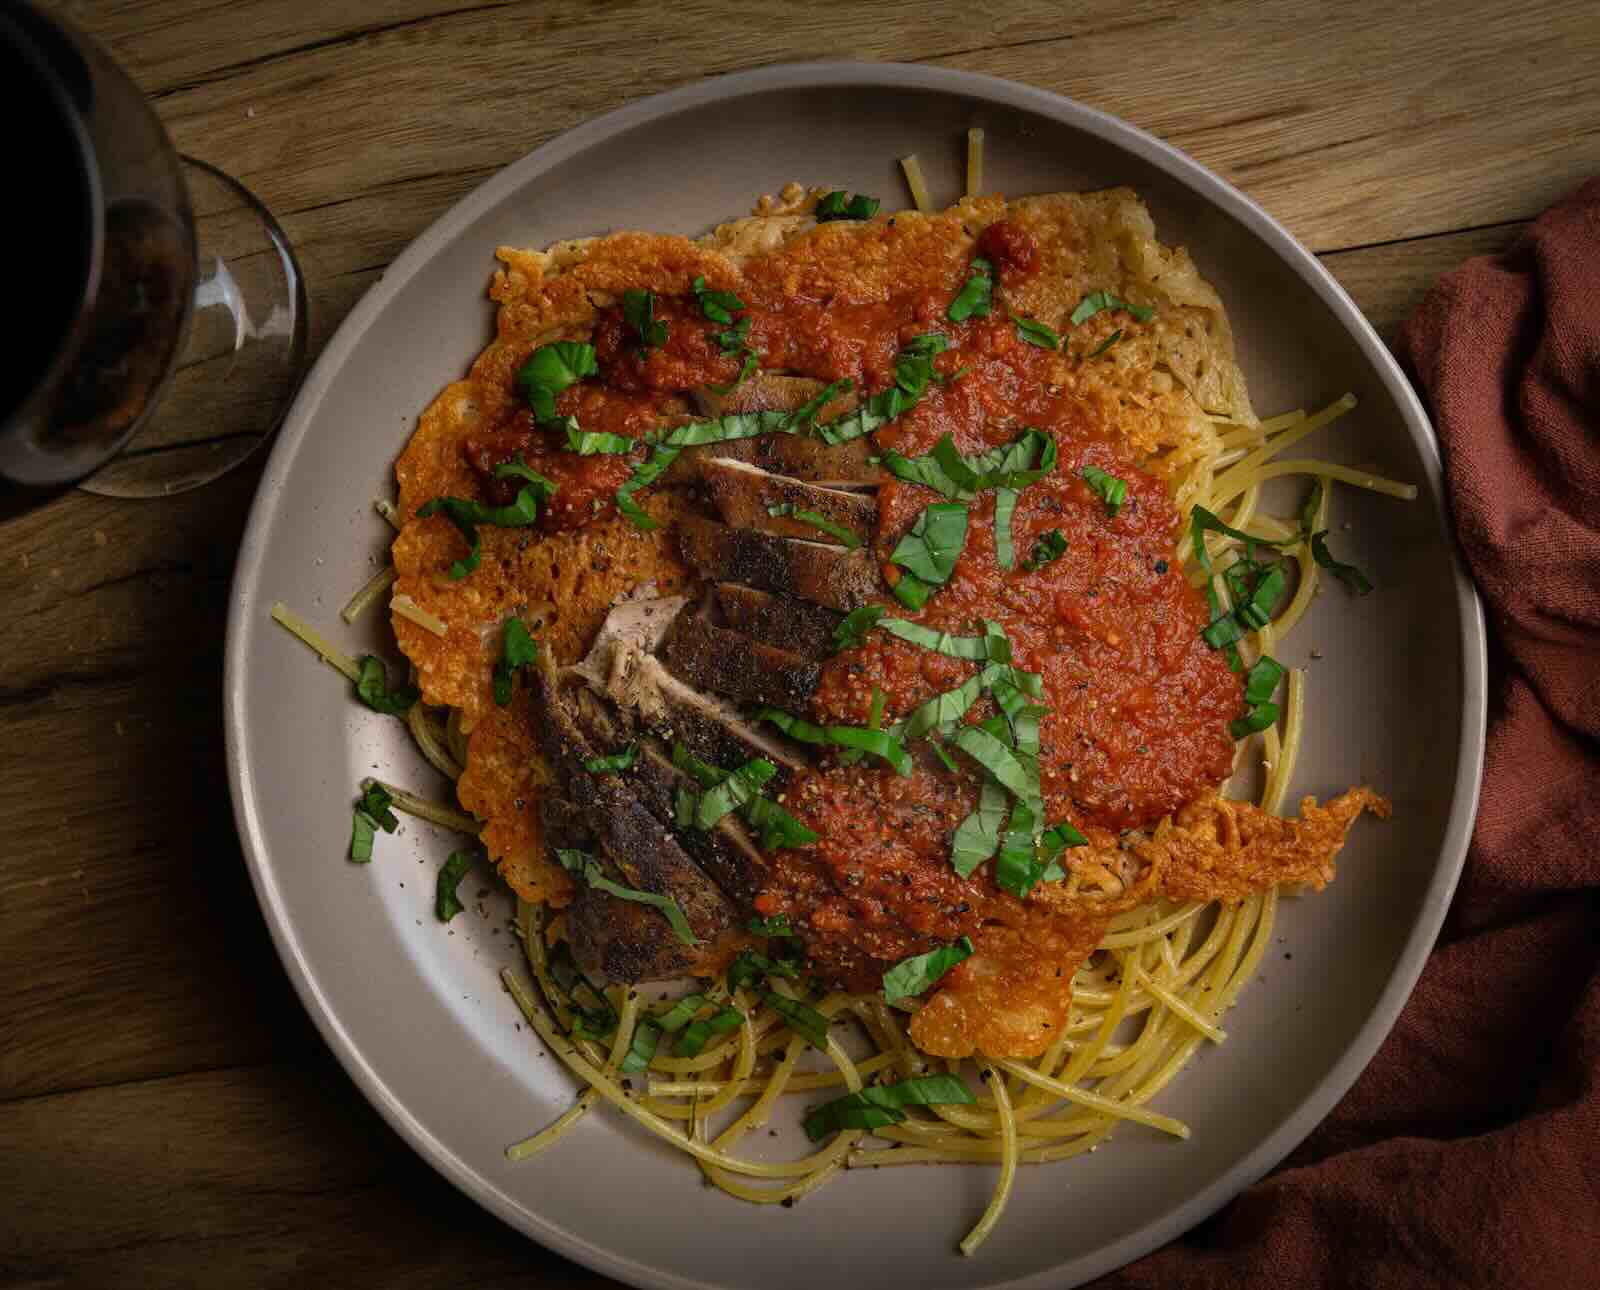 Roasted pheasant in a hearty marinara sauce on spaghetti